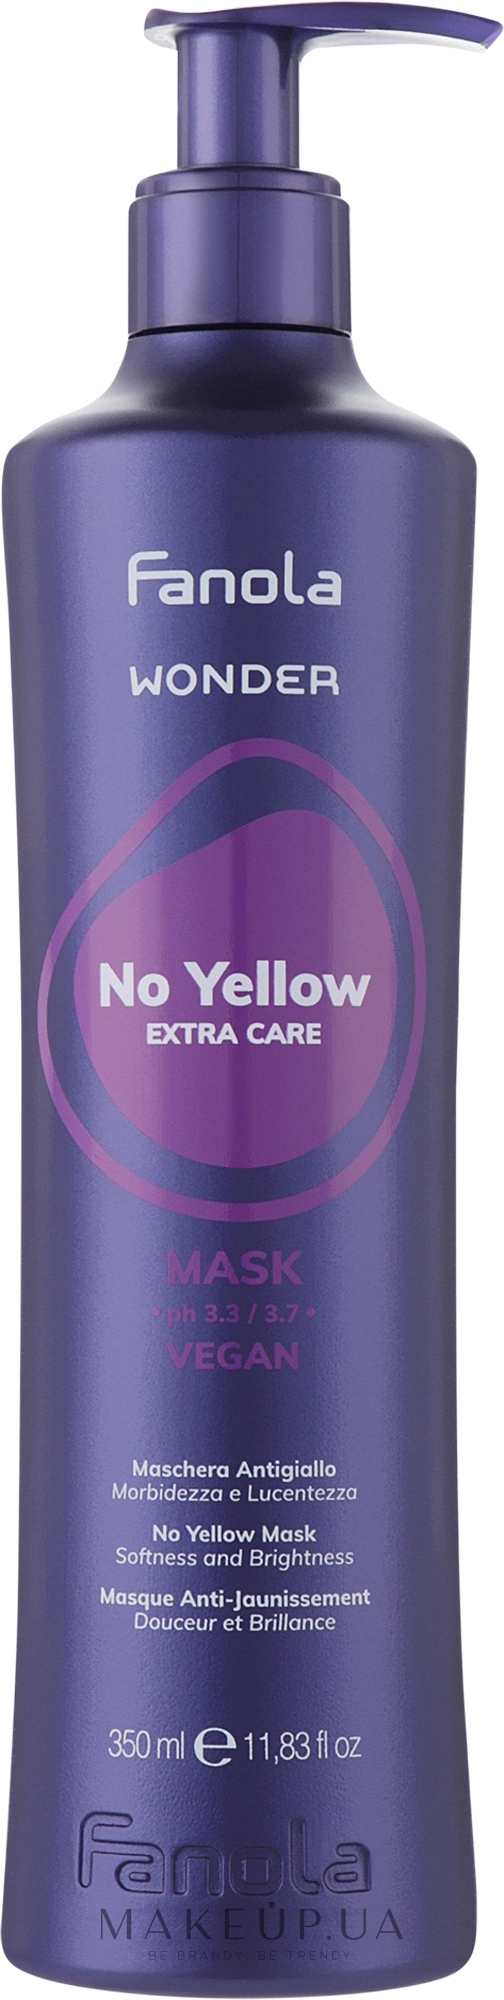 Маска антижовта для волосся - Fanola Wonder No Yellow Extra Care Mask — фото 350ml